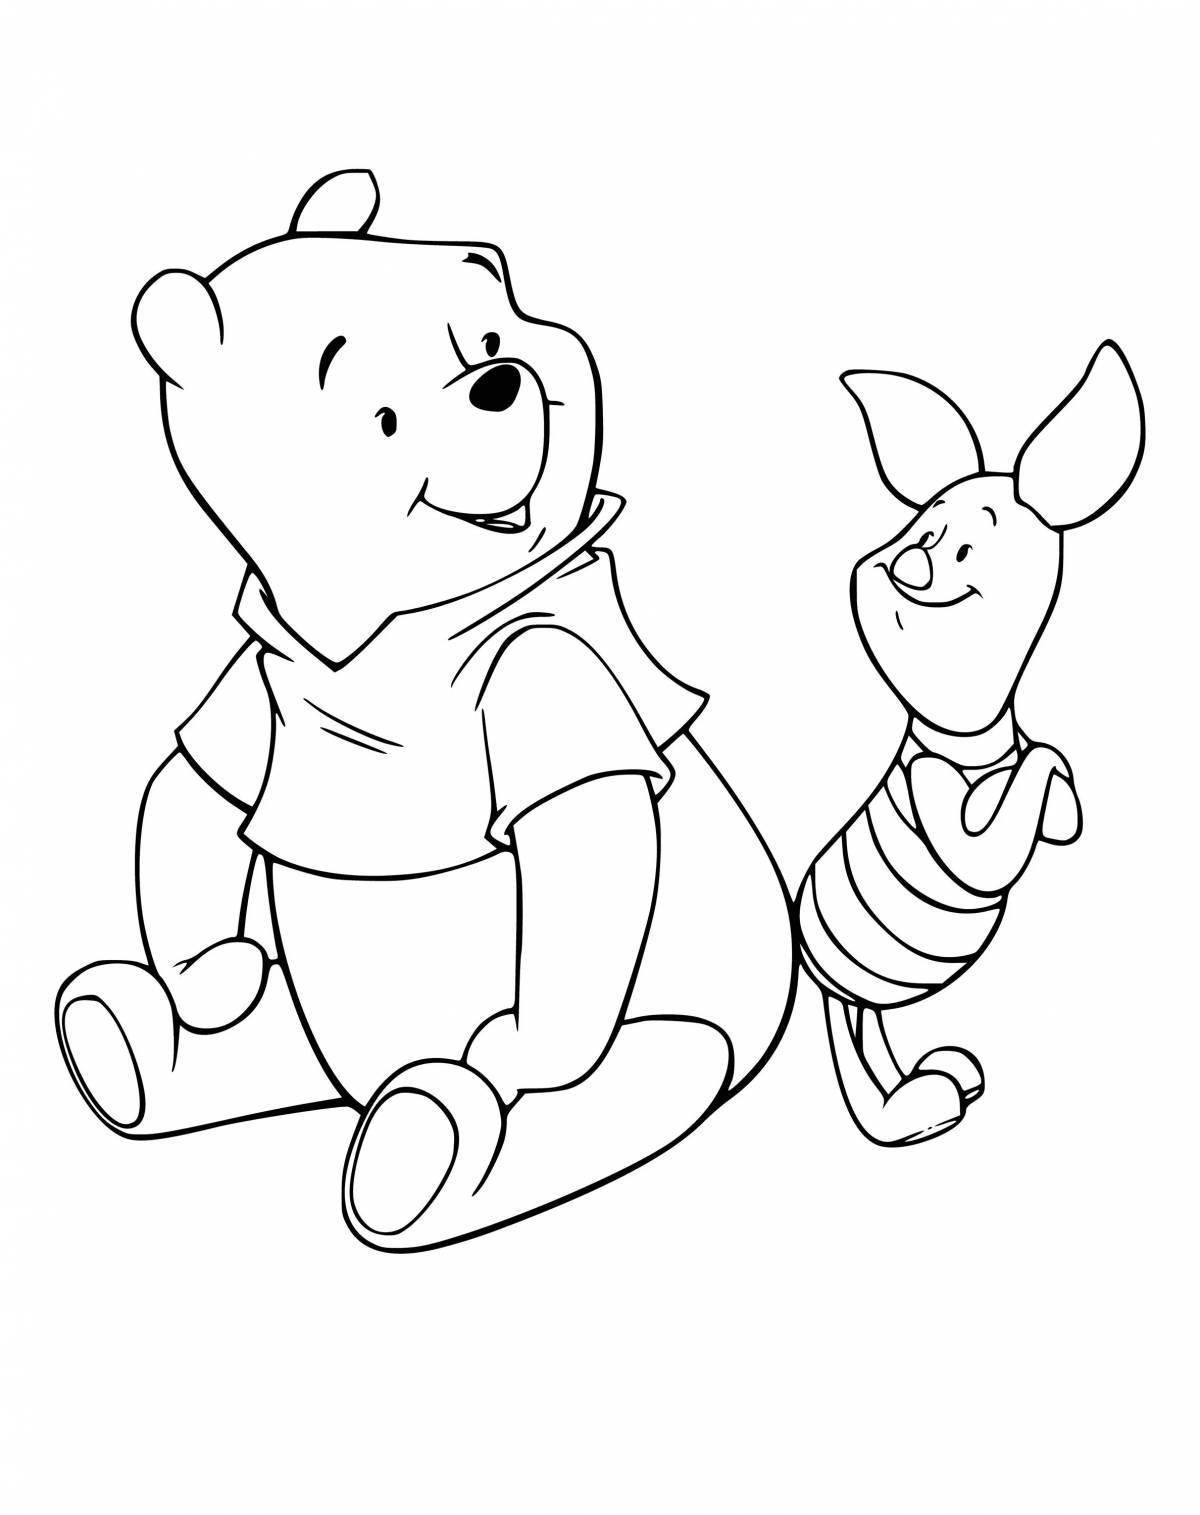 Coloring page joyful winnie the pooh